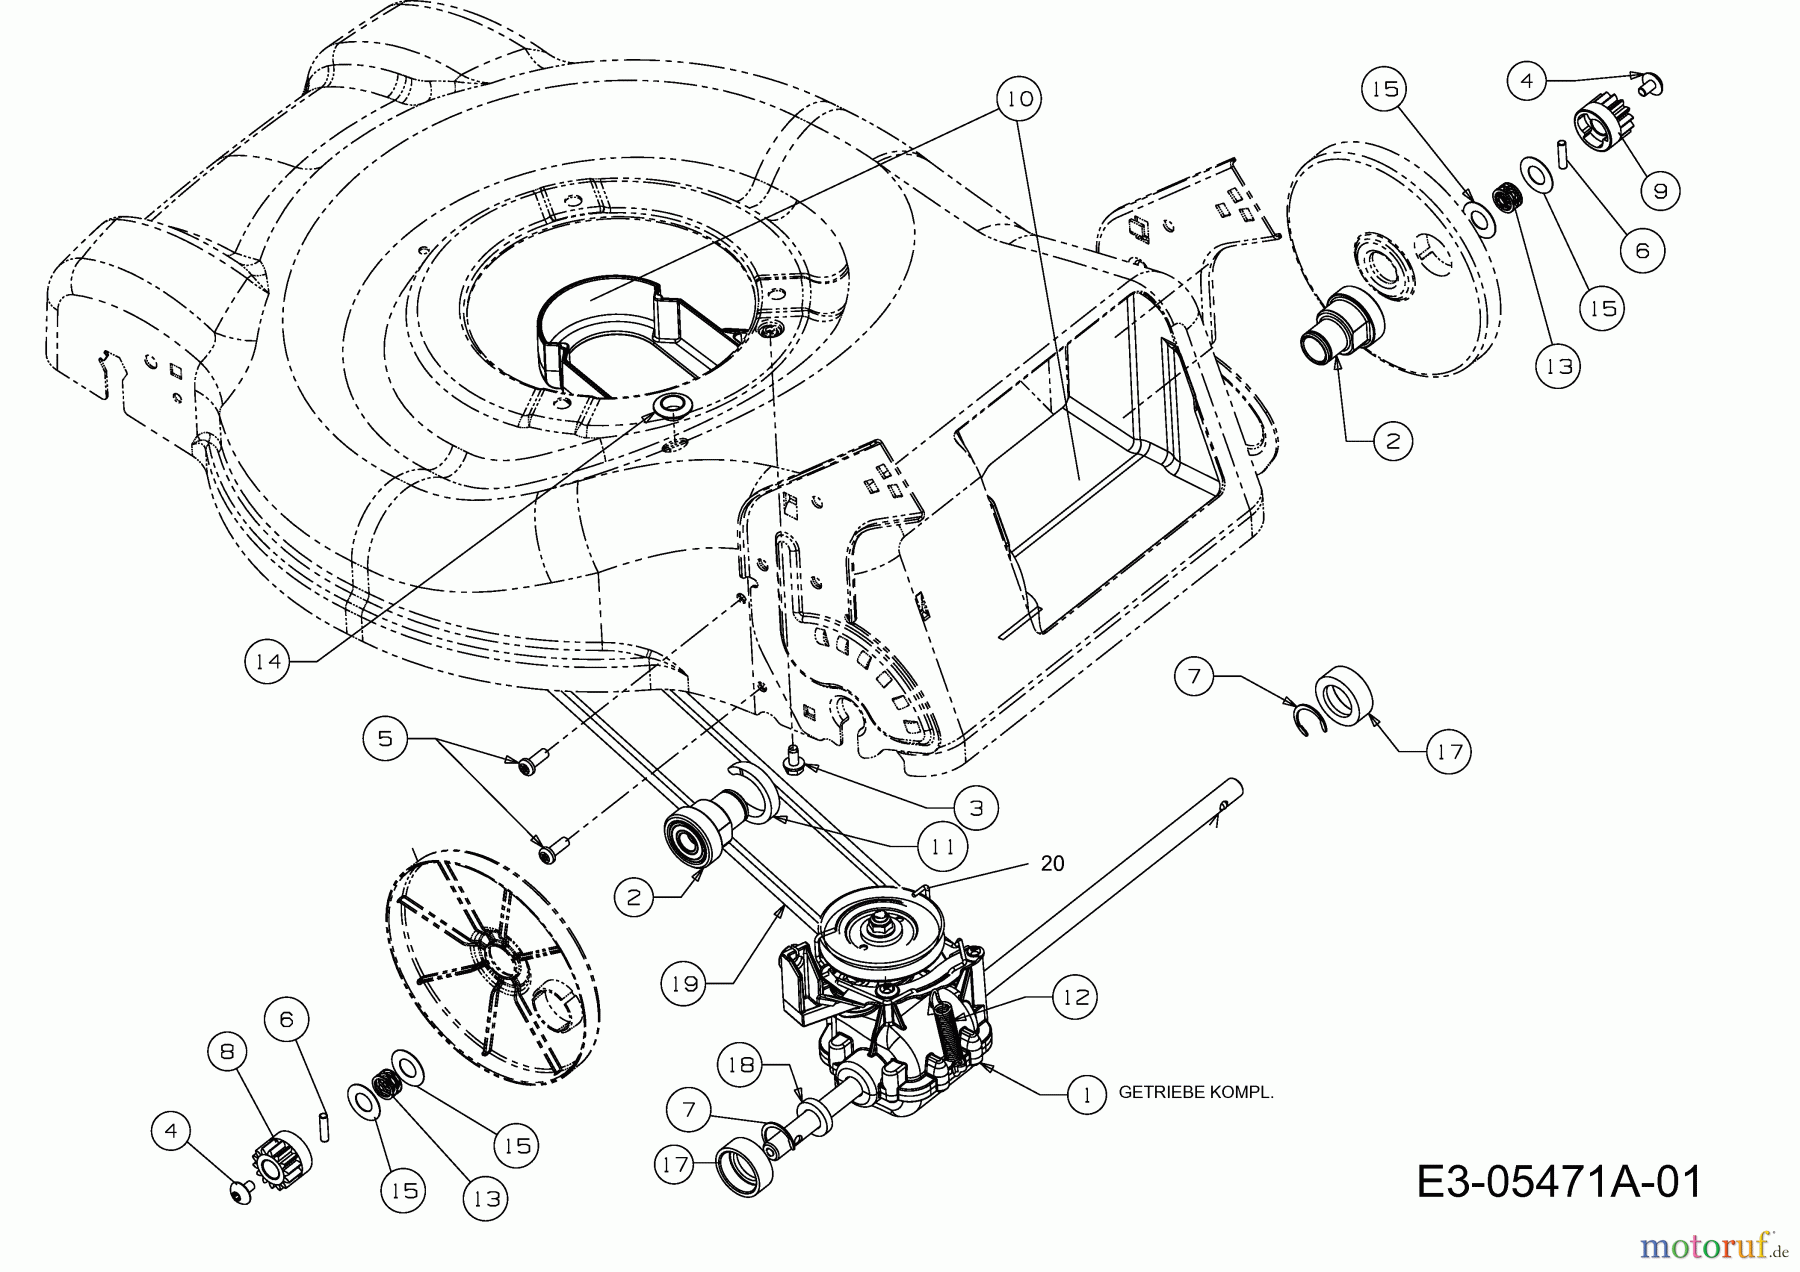  MTD Motormäher mit Antrieb 46 SPBE 12EEJ58U600  (2011) Getriebe